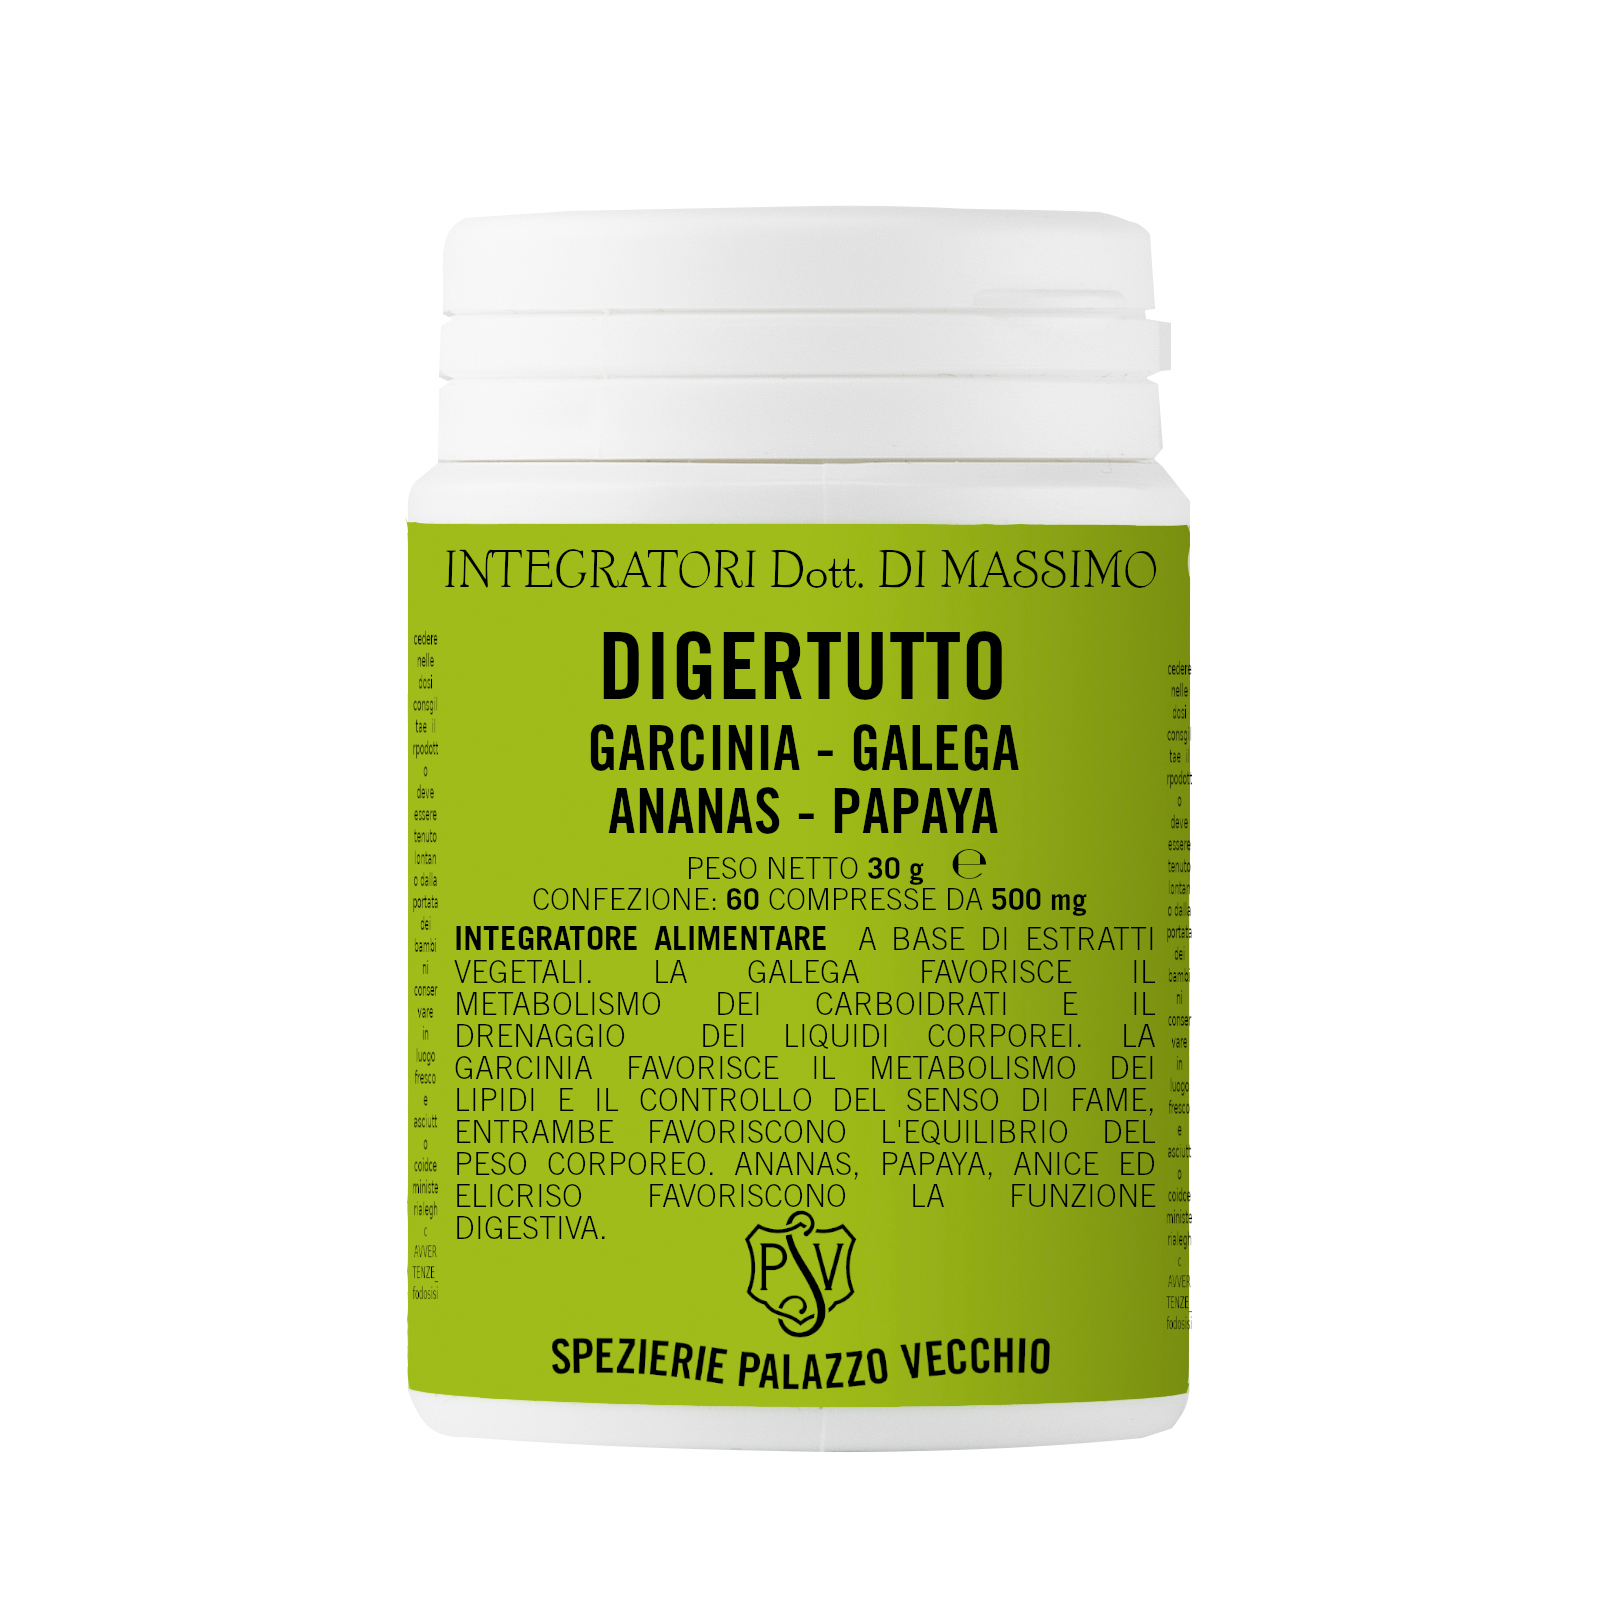 DIGERTUTTO Garcinia - Galega- Ananas - Papaya-0